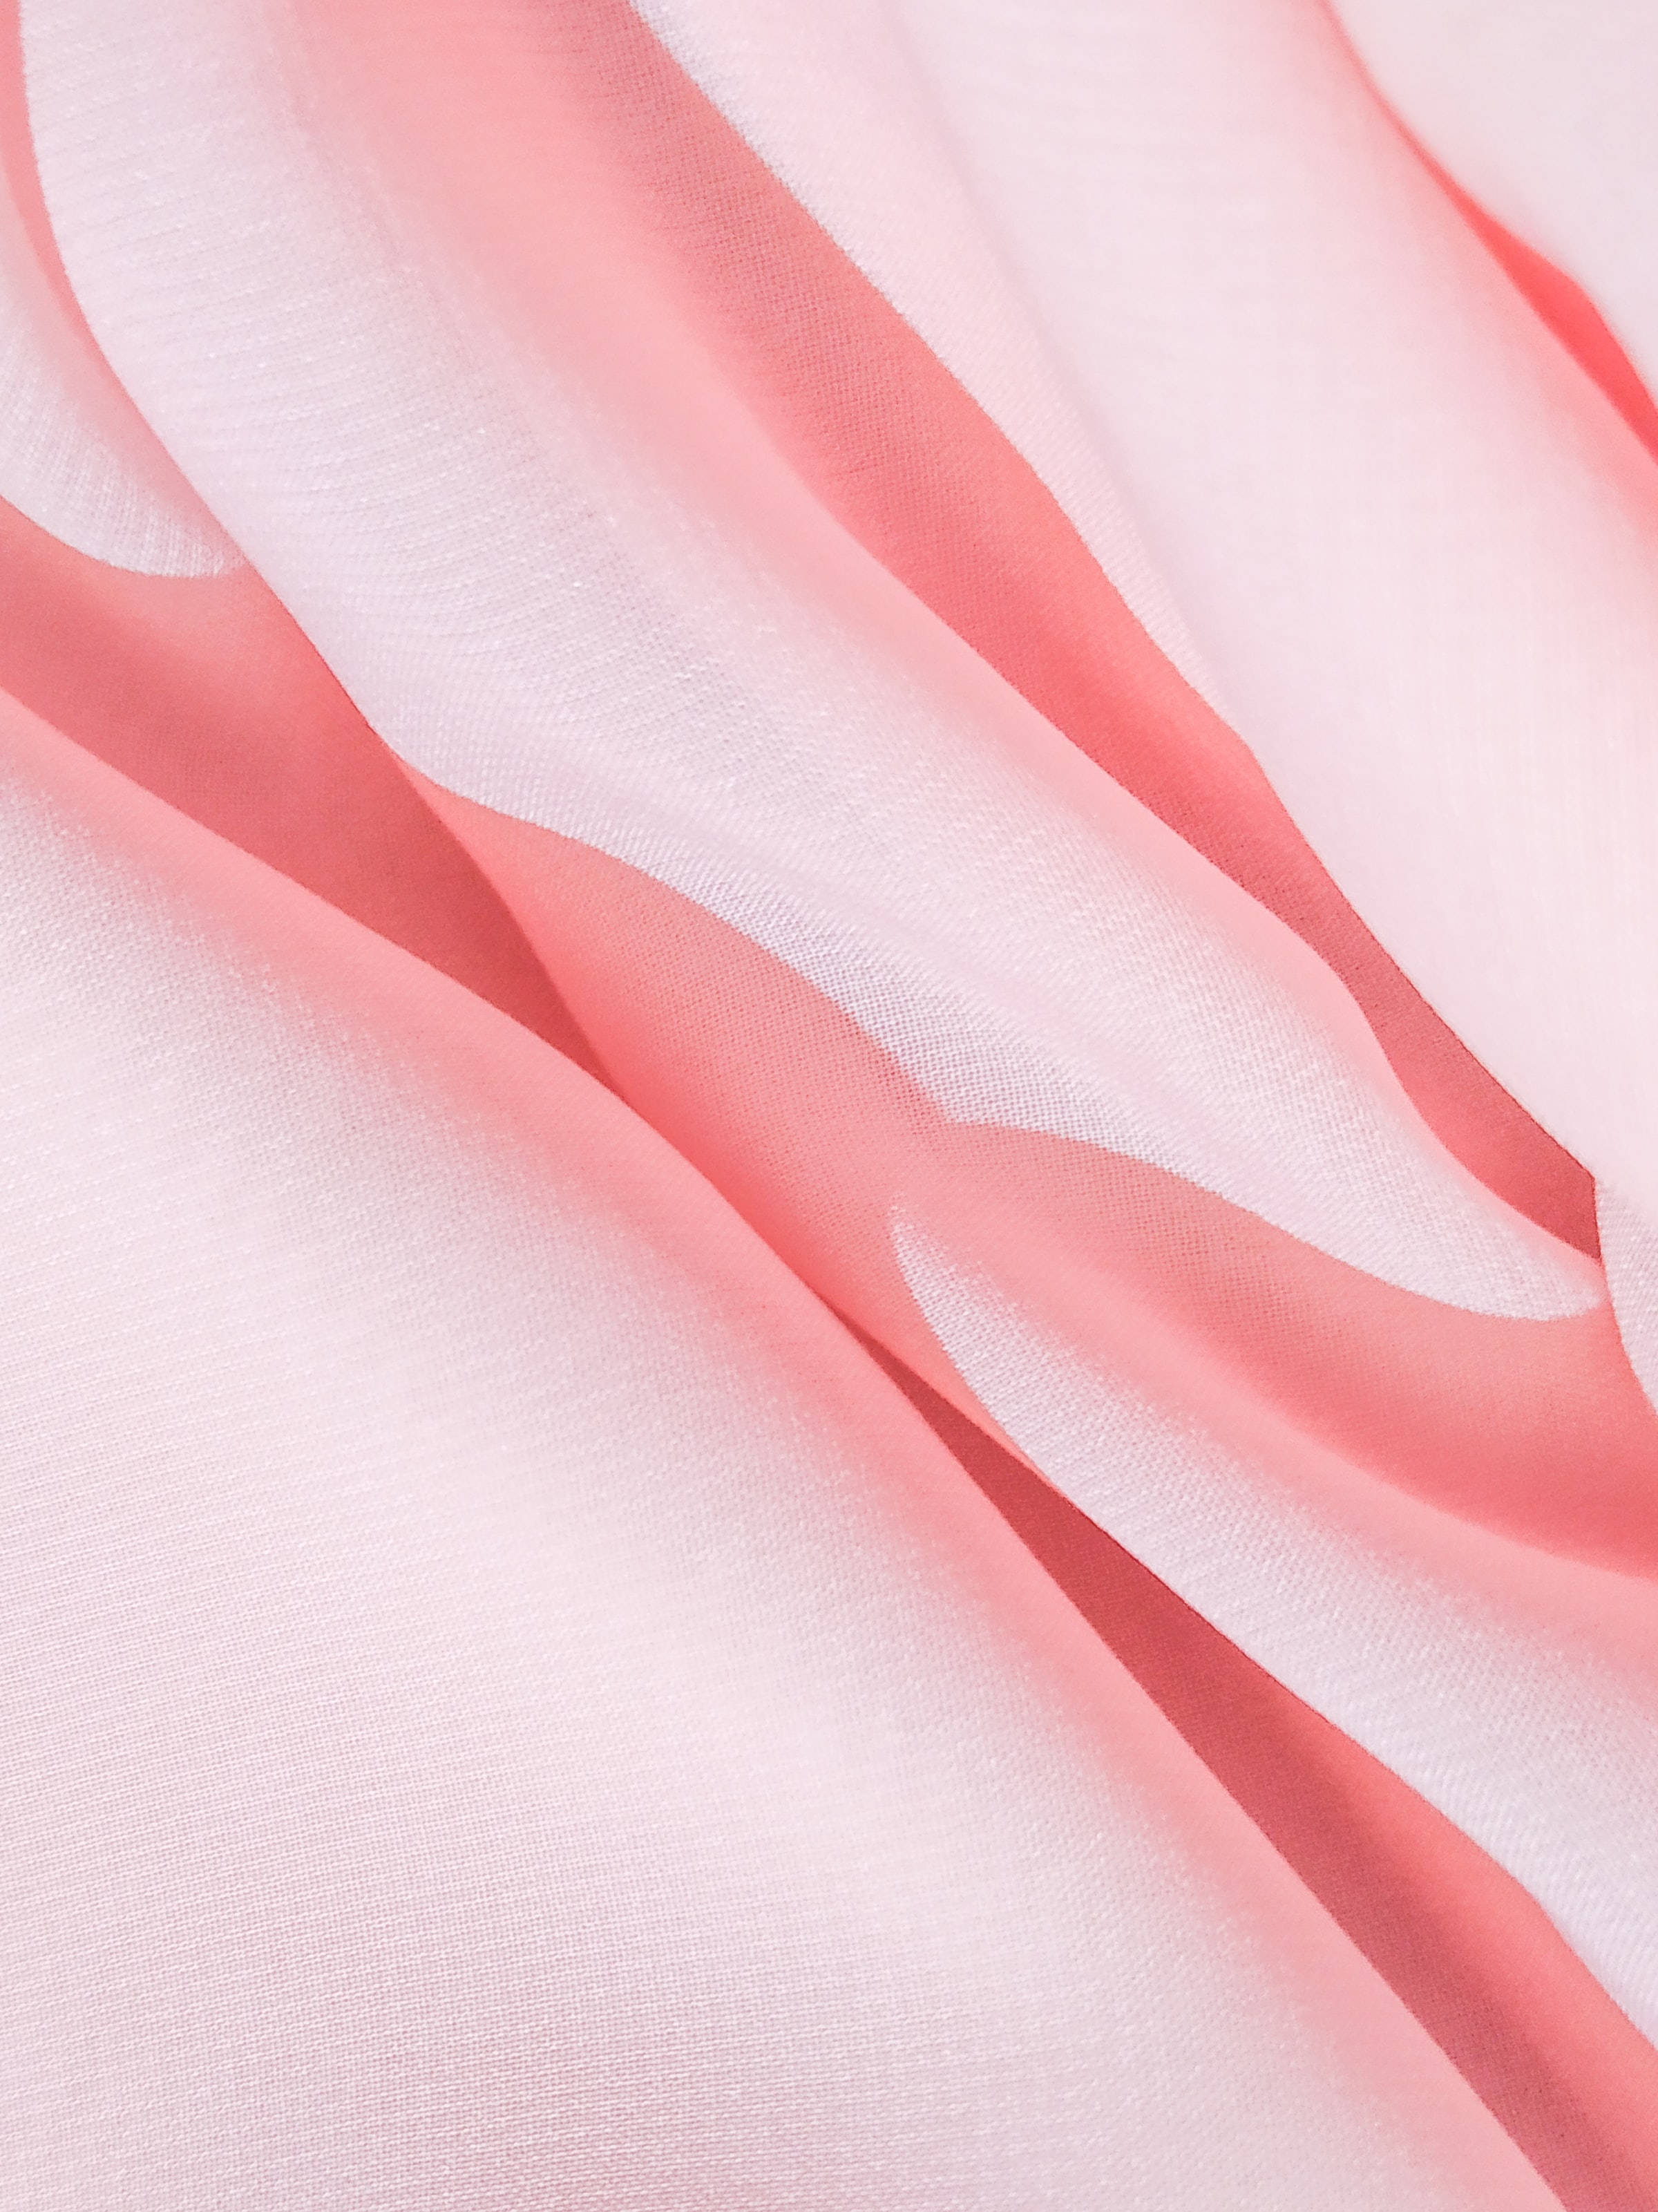 Cute Pink Aesthetic Silk Fabric Texture